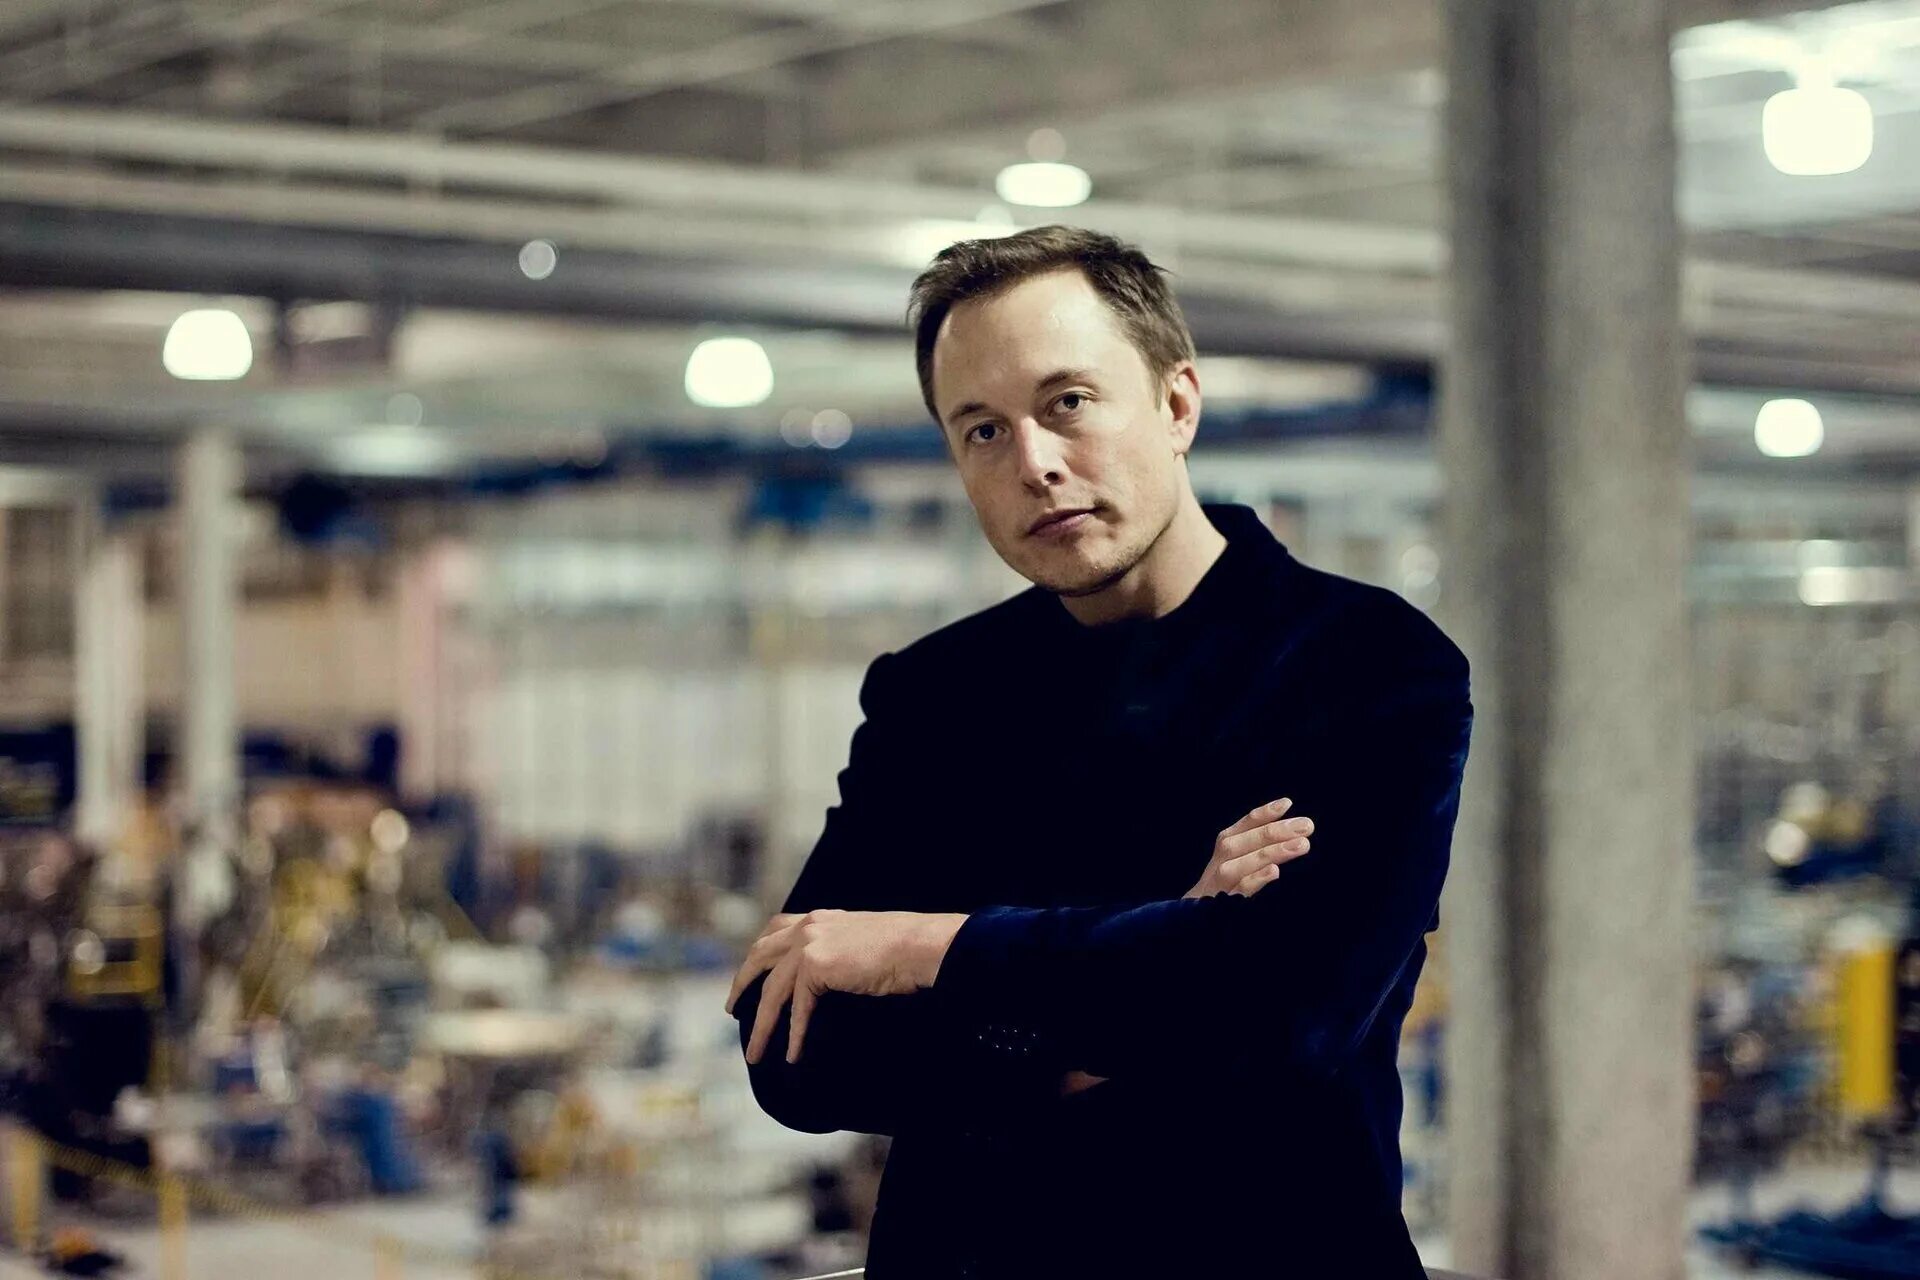 Masking фото. Elon Musk. Илон Маск (Elon Musk). Илон Маск фотосессия. Elon Musk фото.